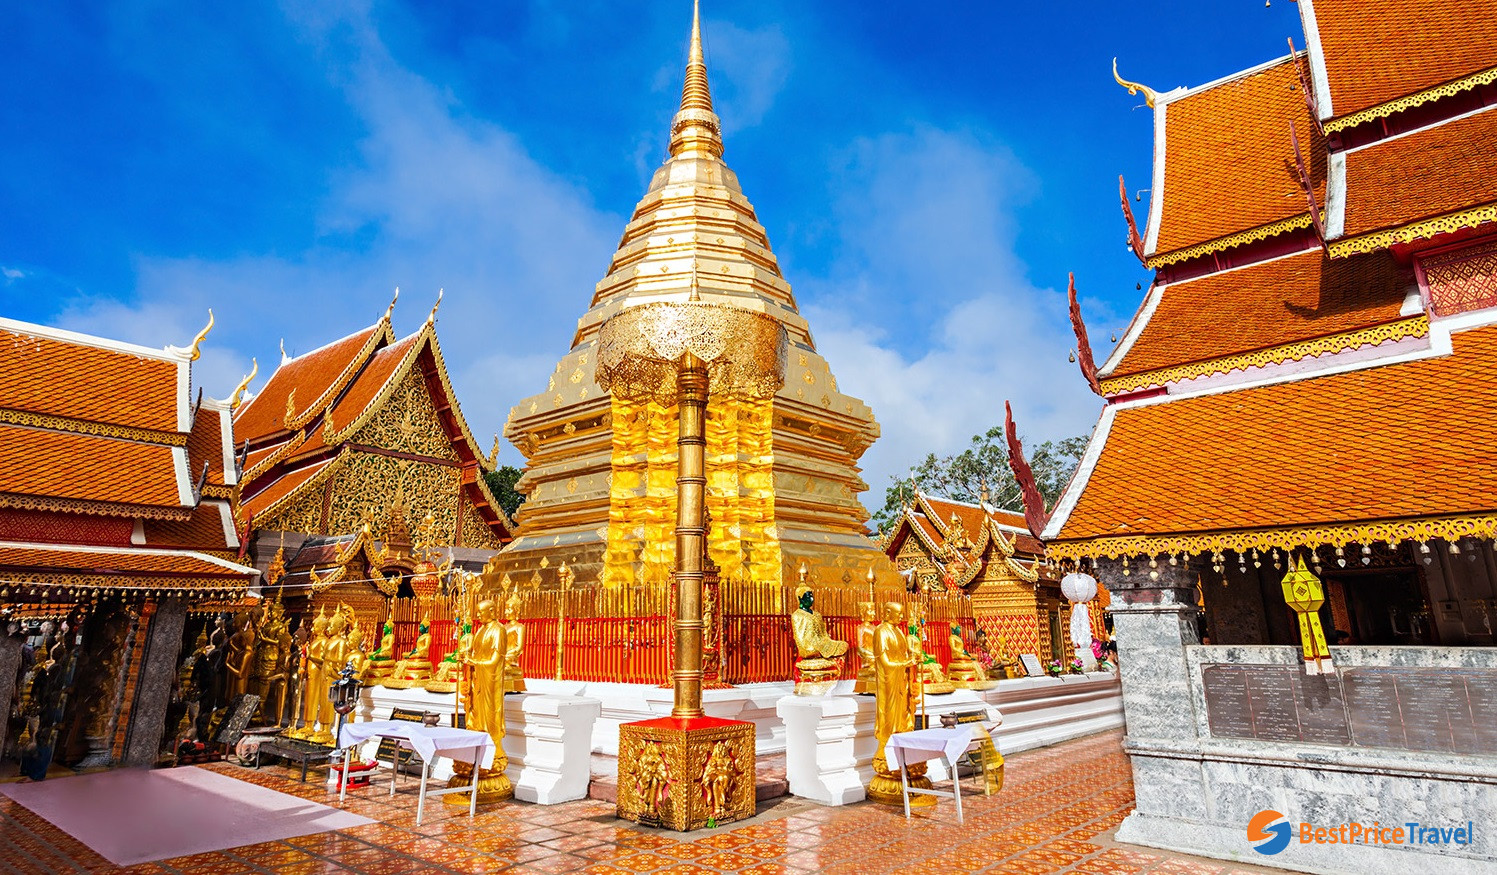 Wat Phrathat Doi Suthep Temple in Chiang Mai